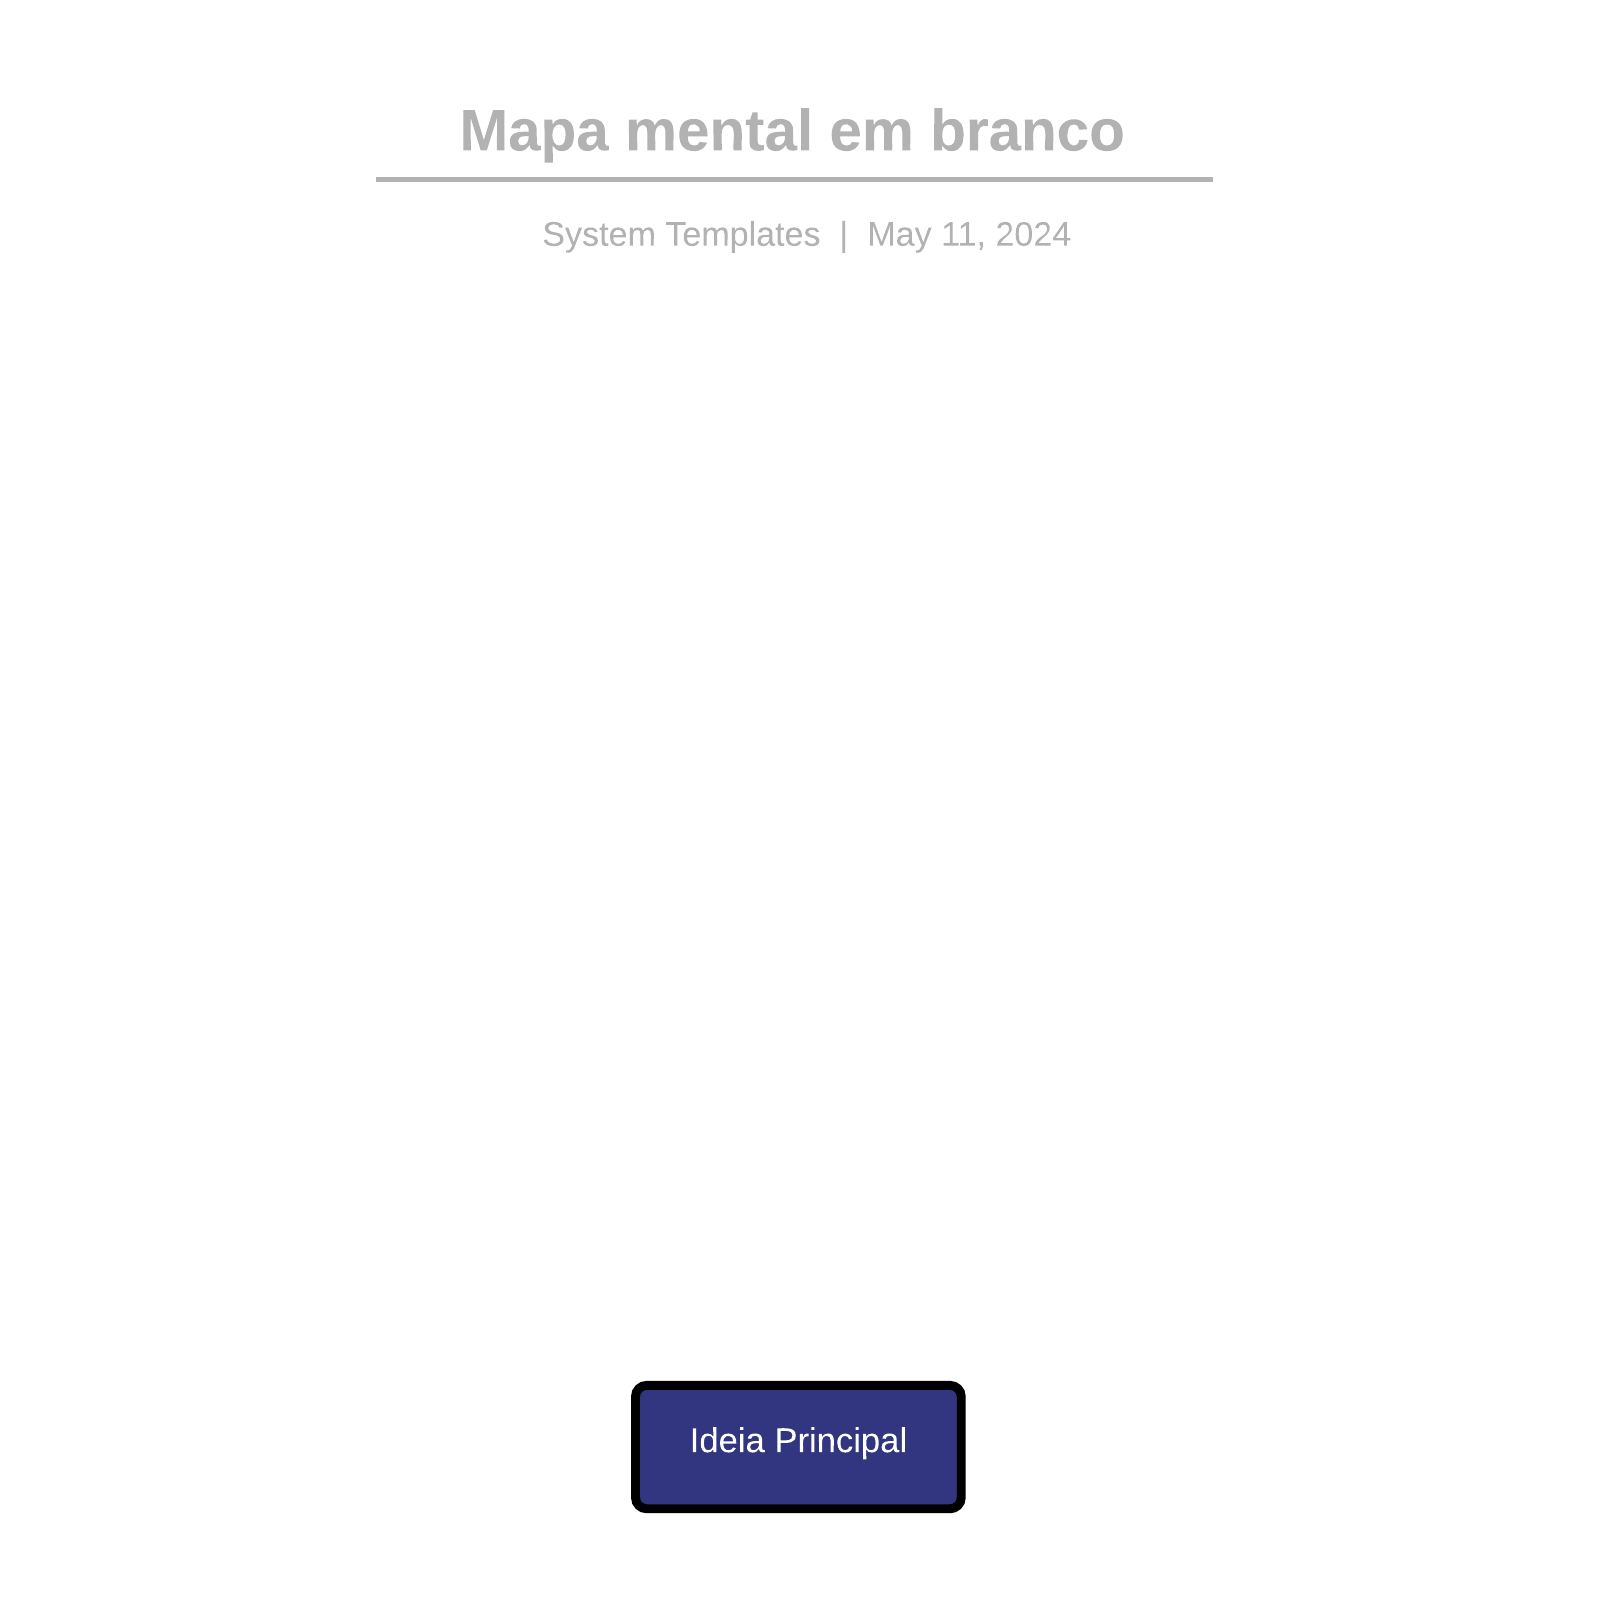 Mapa mental em branco